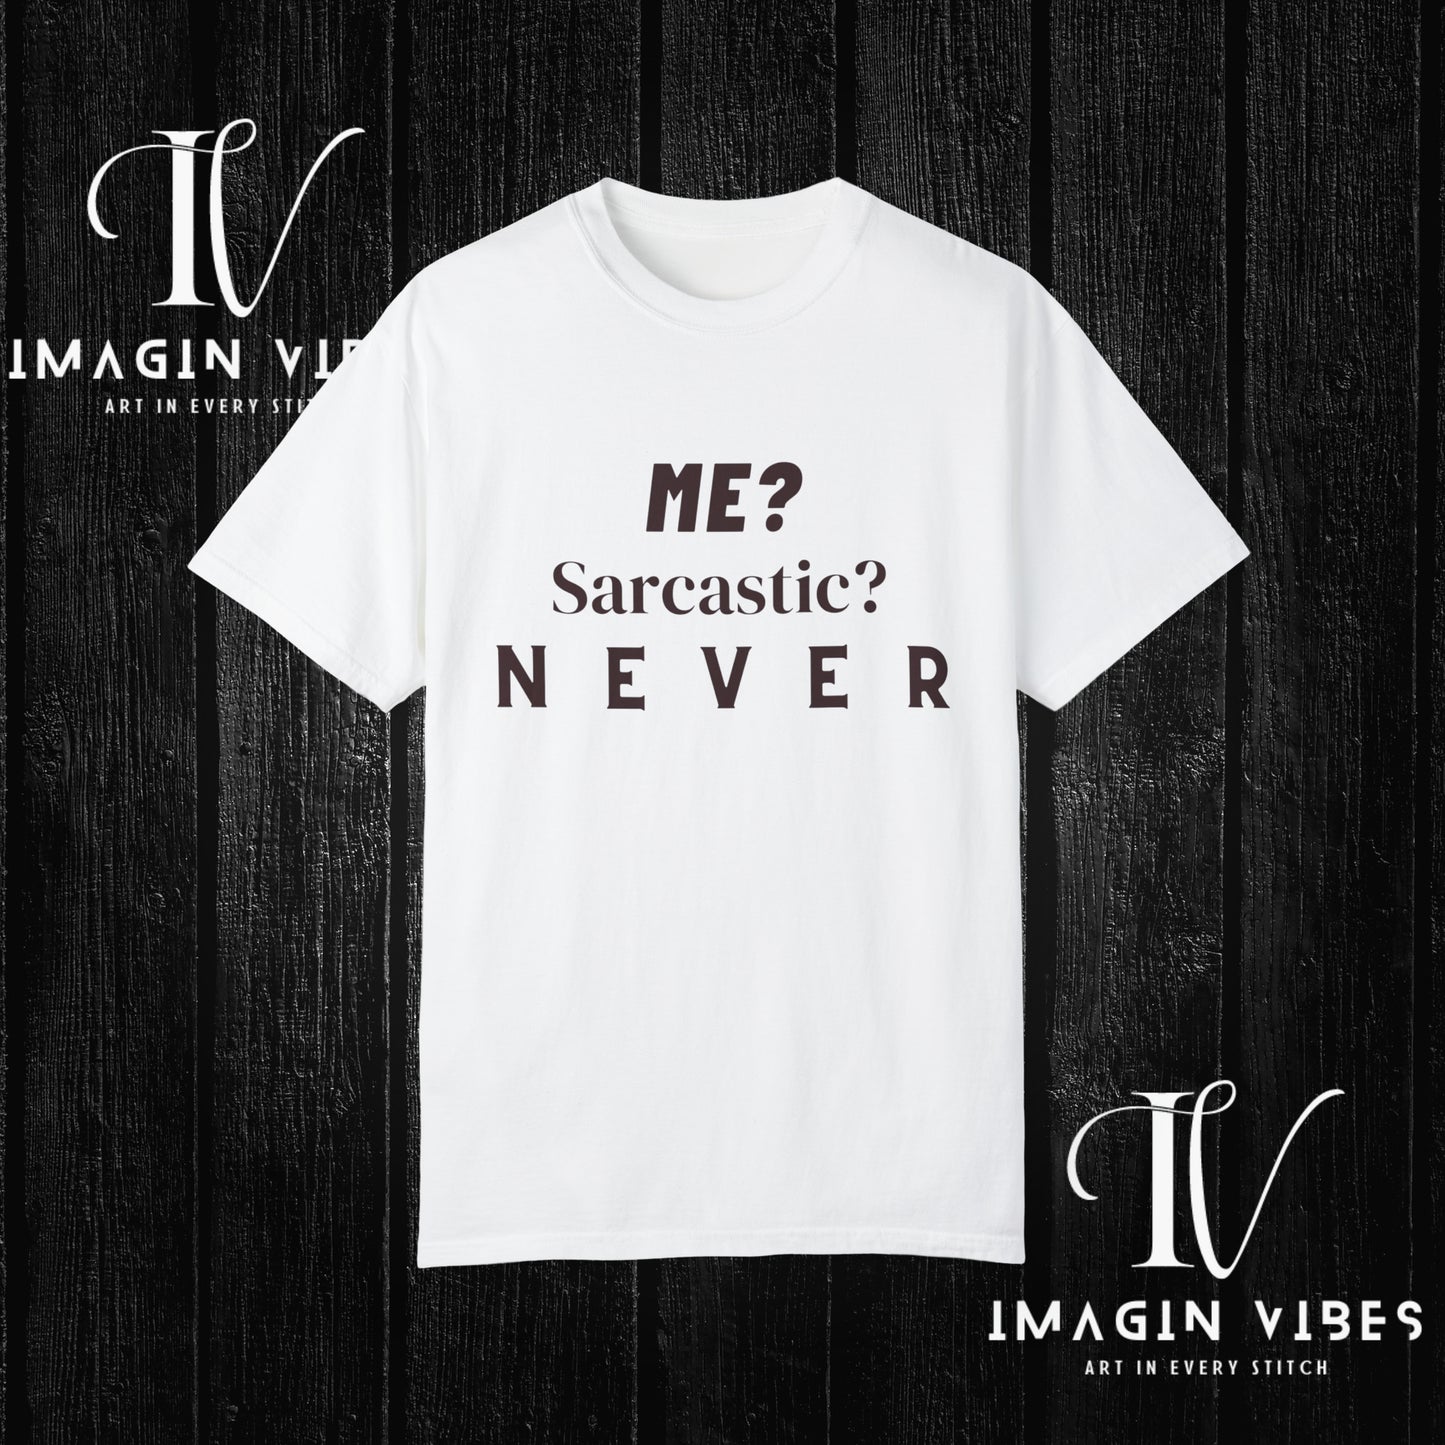 Me? Sarcastic? Never T-Shirt - Unisex Tee - Funny Sarcastic Shirt T-Shirt White S 